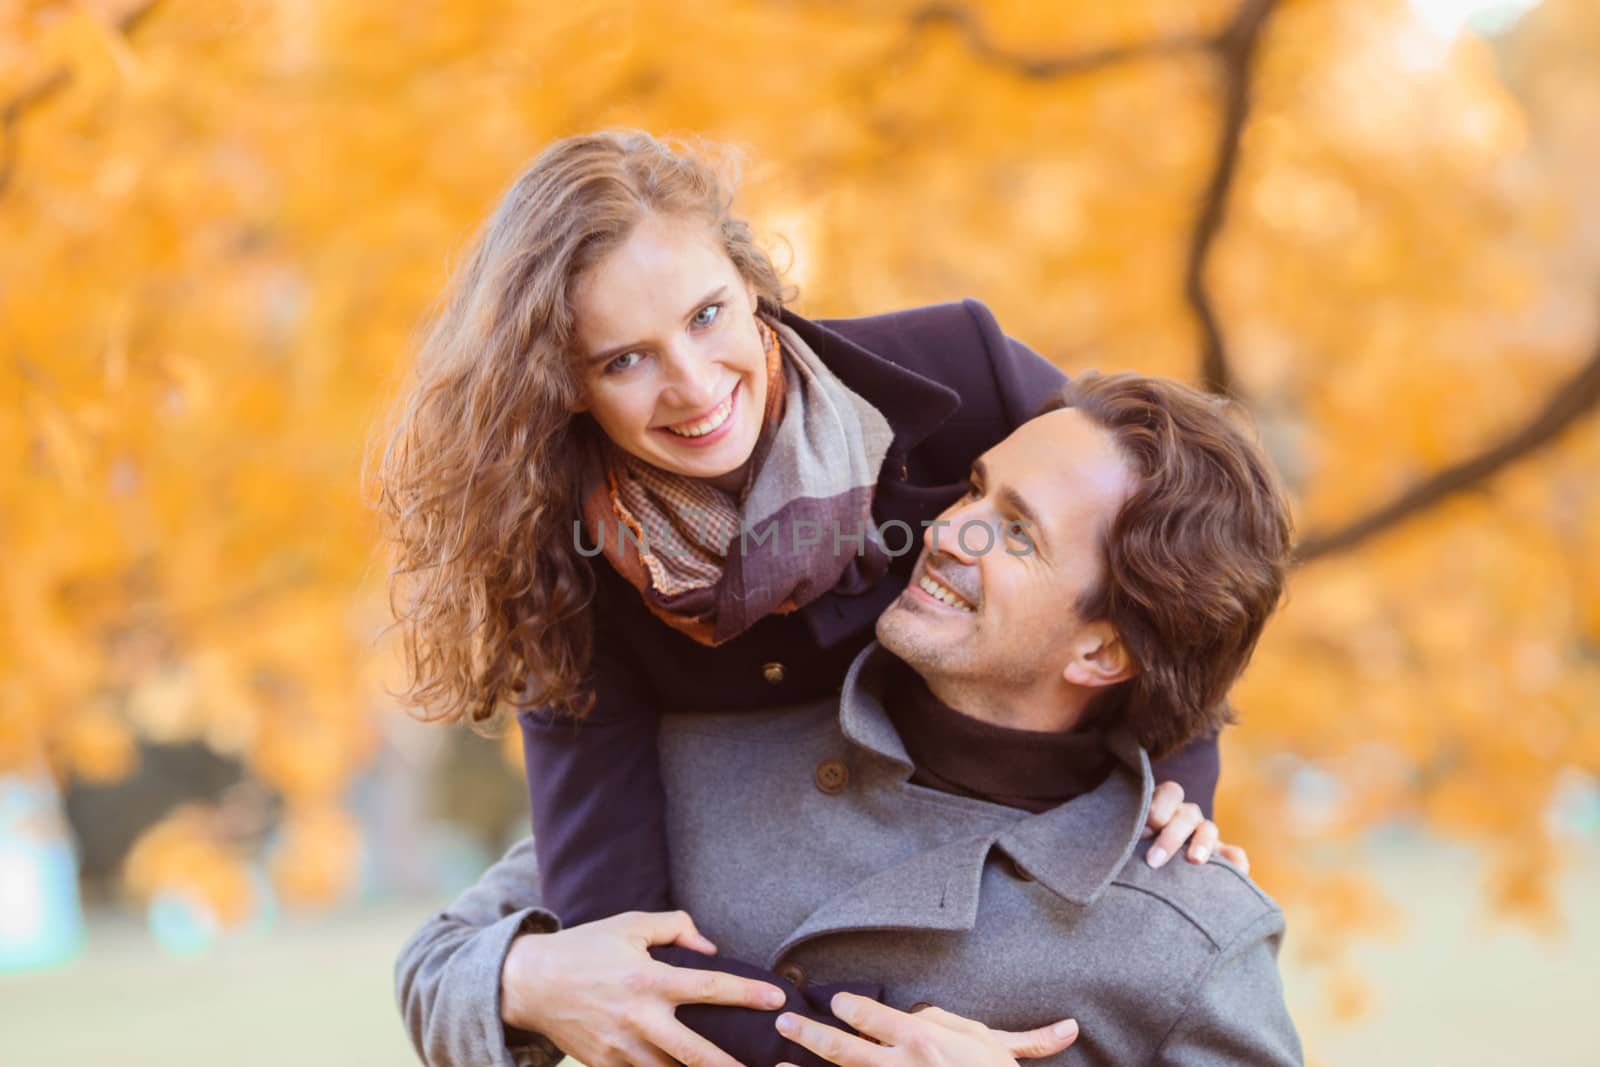 Couple in autumn park having fun, smiling man carrying woman piggyback outdoor